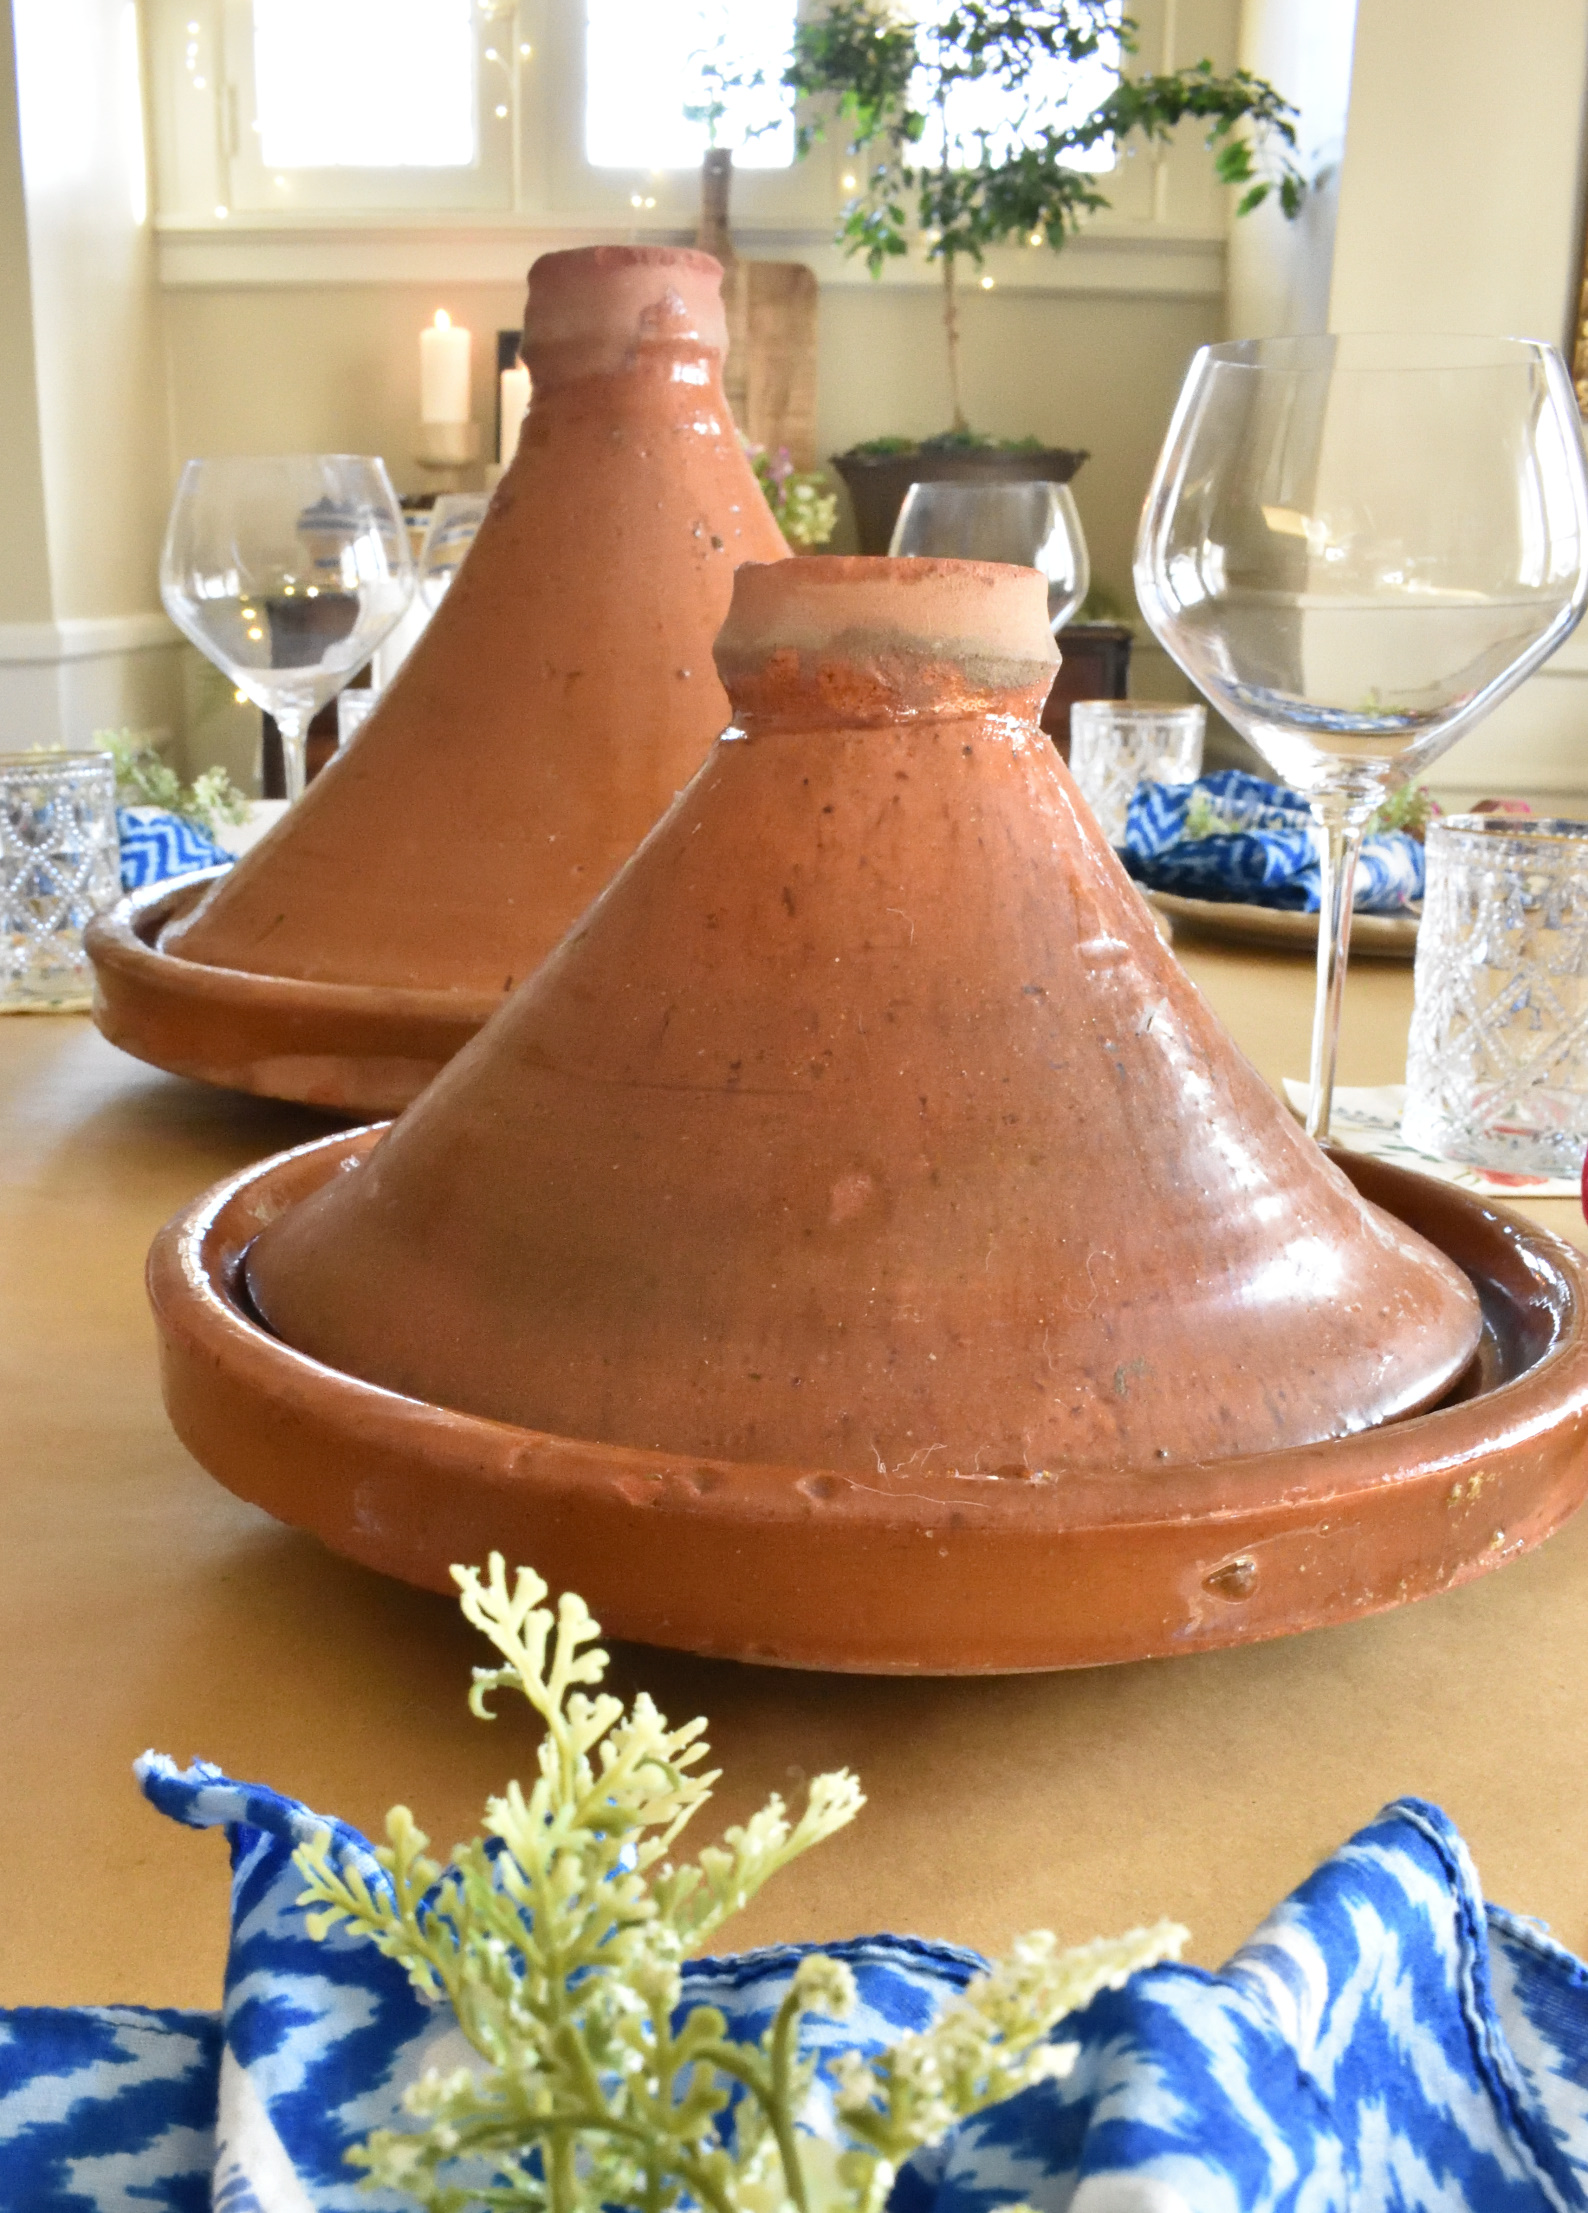 Moroccan tagine pots